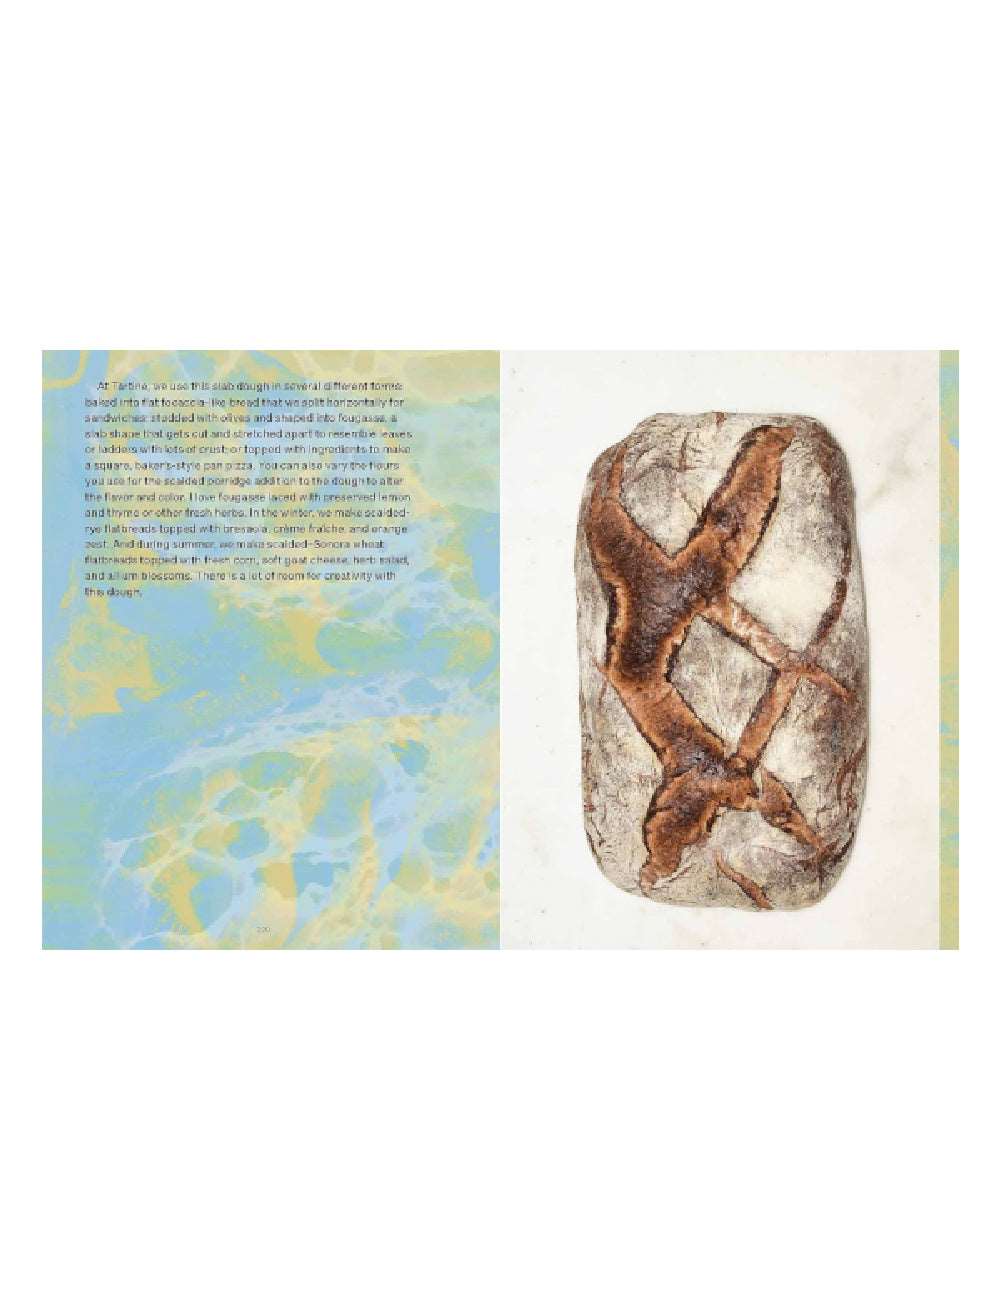 Bread Book / CHAD ROBERTSON & JENNIFER LATHAM